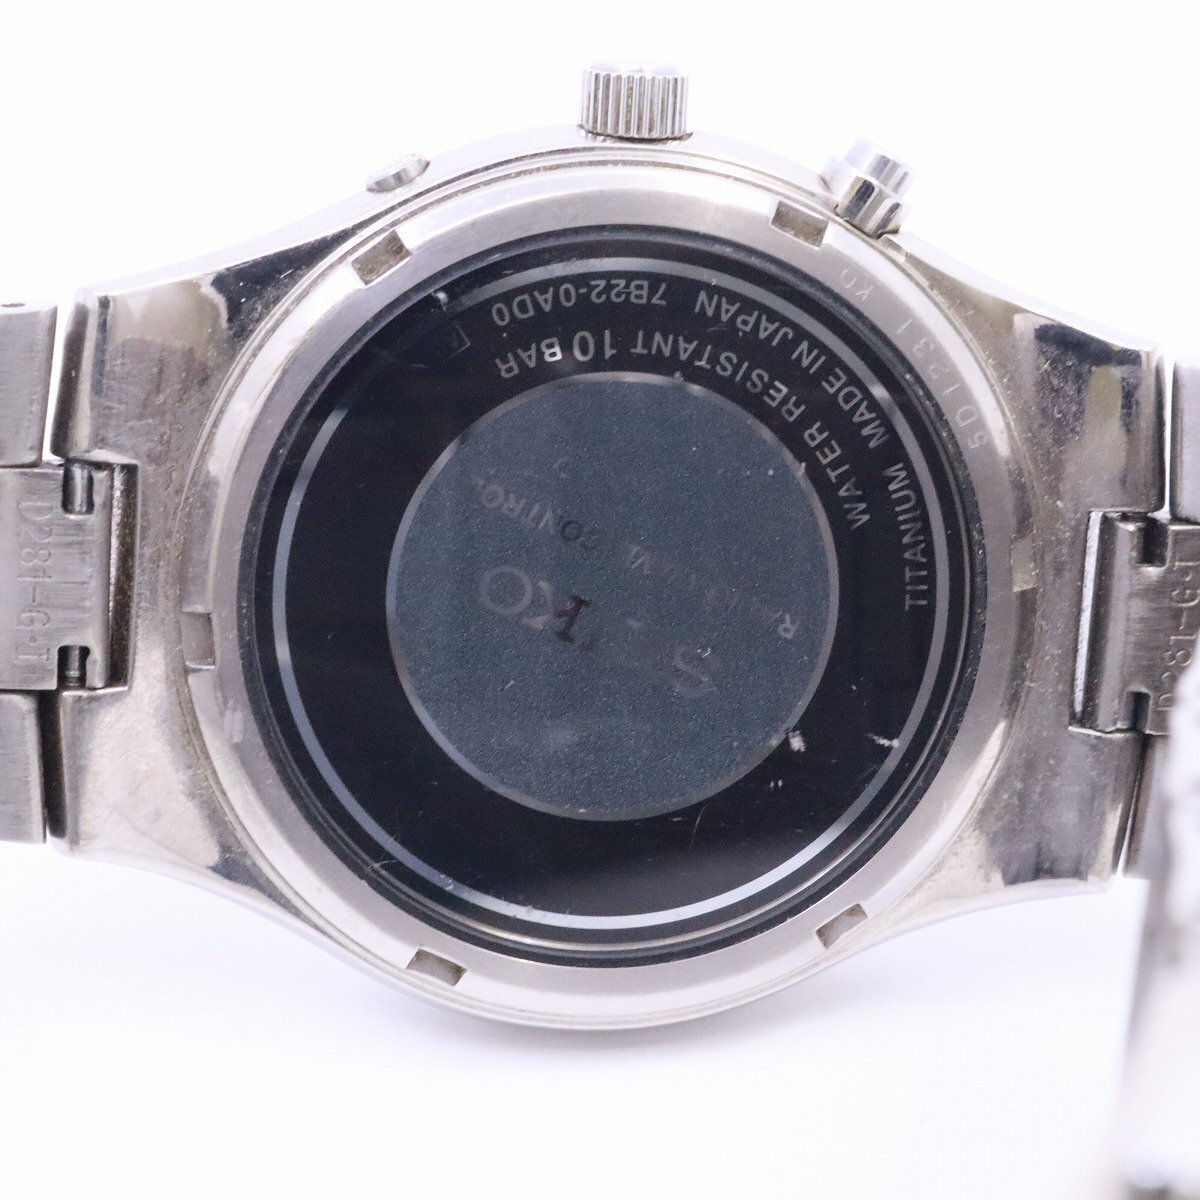 SEIKO セイコー スピリット ソーラー電波 メンズ 腕時計 チタン 黒文字盤 SBTM005 / 7B22-0AD0【いおき質店】_画像9